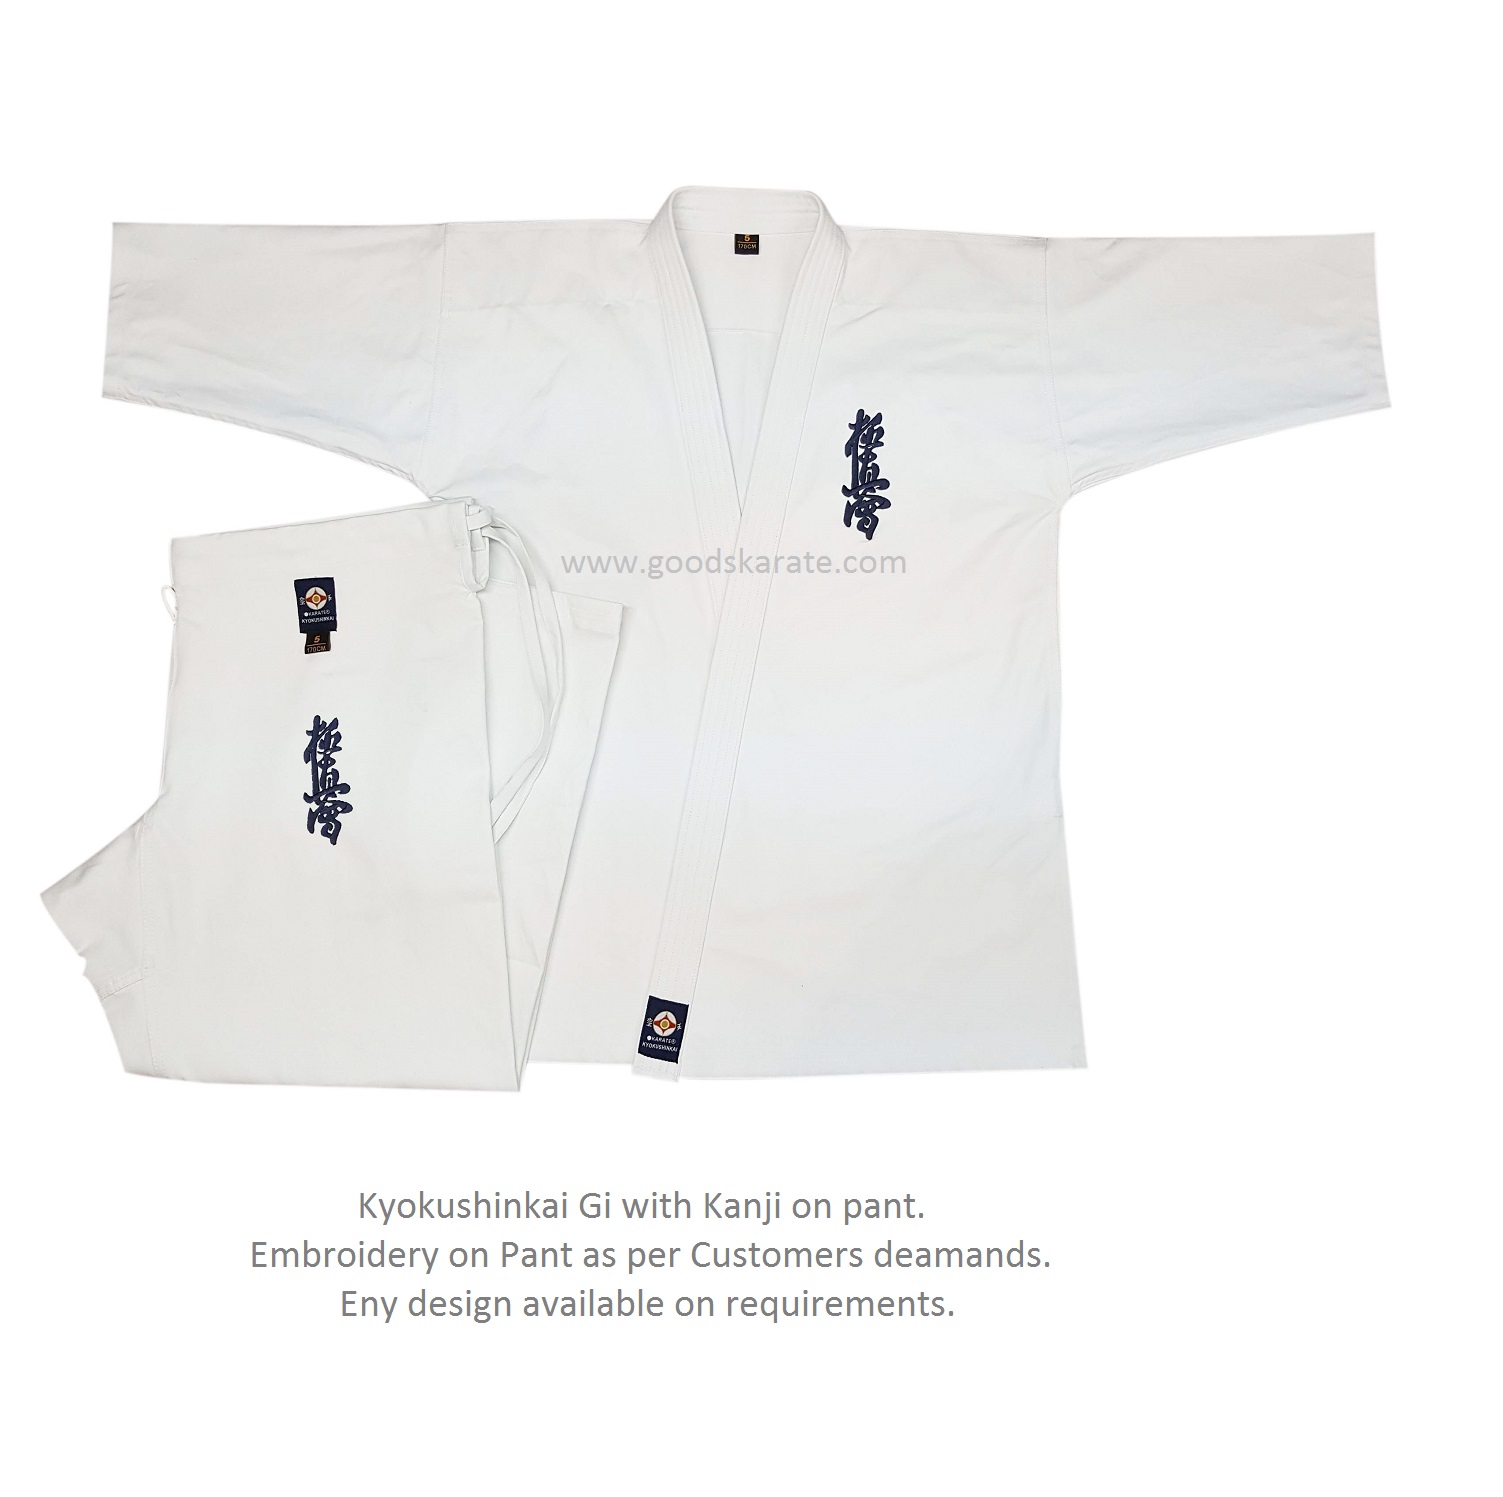 Kyokushinkai Gi with kanji on pant